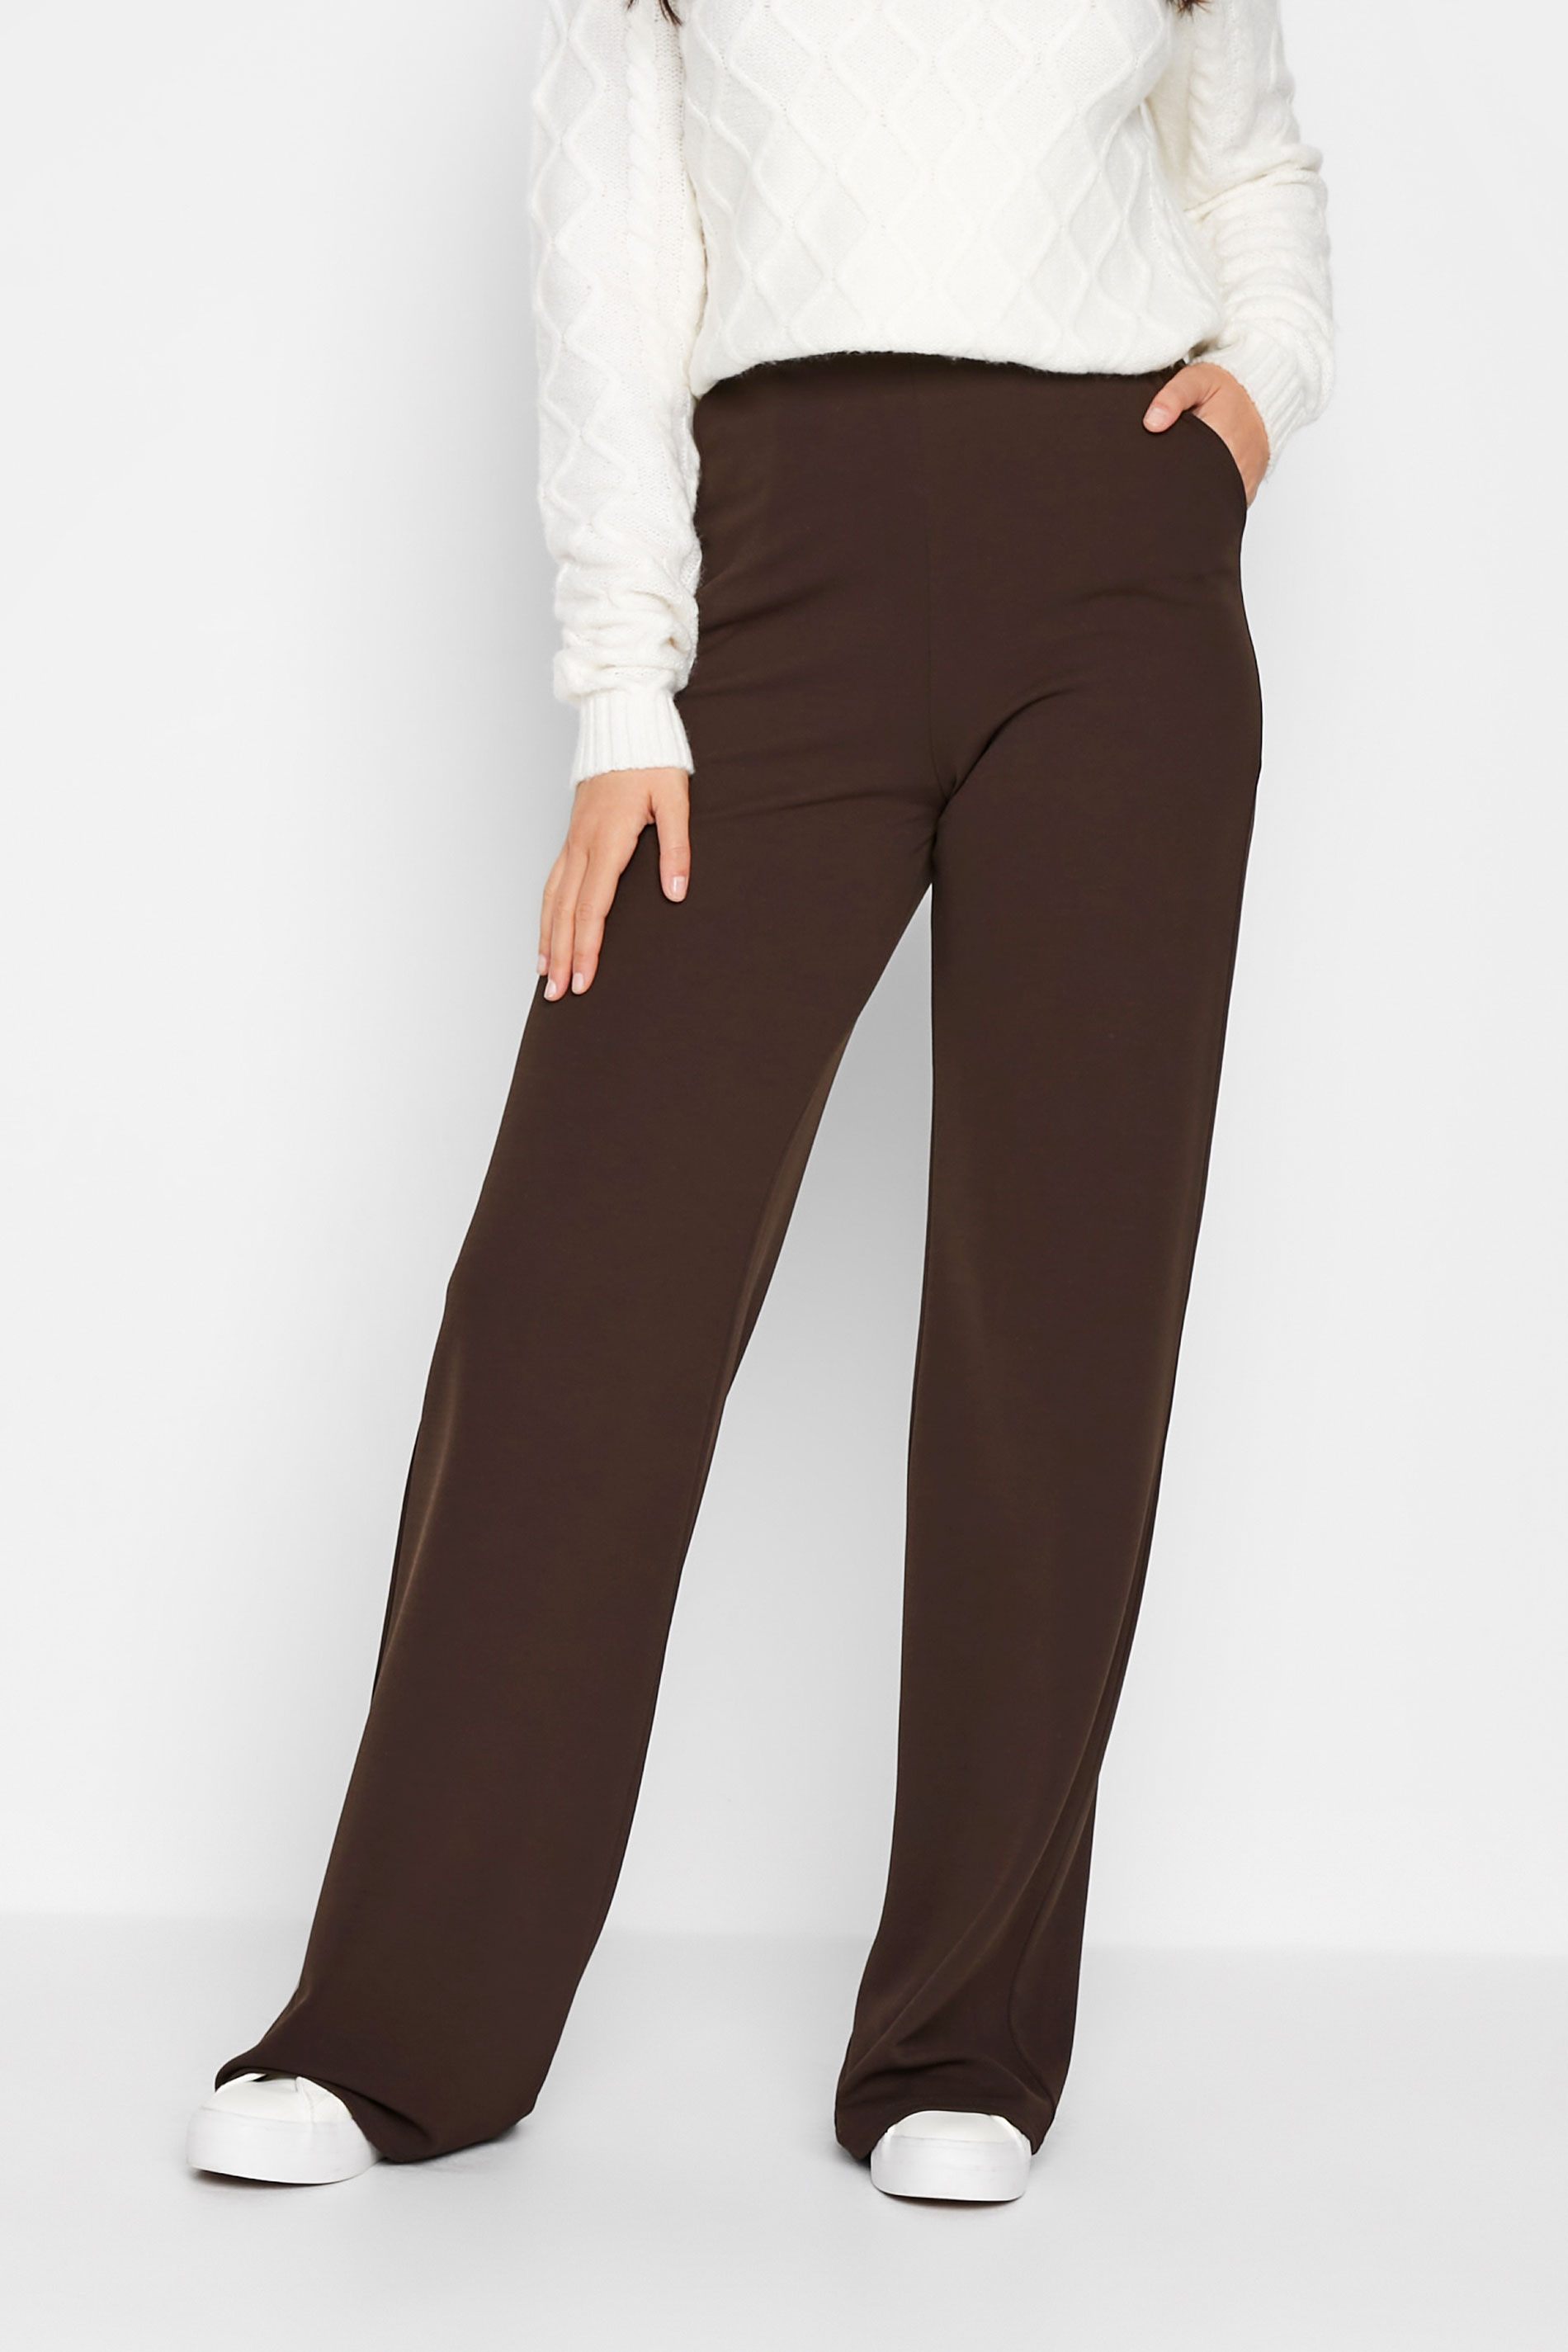 LTS Tall Women's Chocolate Brown Scuba Wide Leg Trousers | Long Tall Sally 1